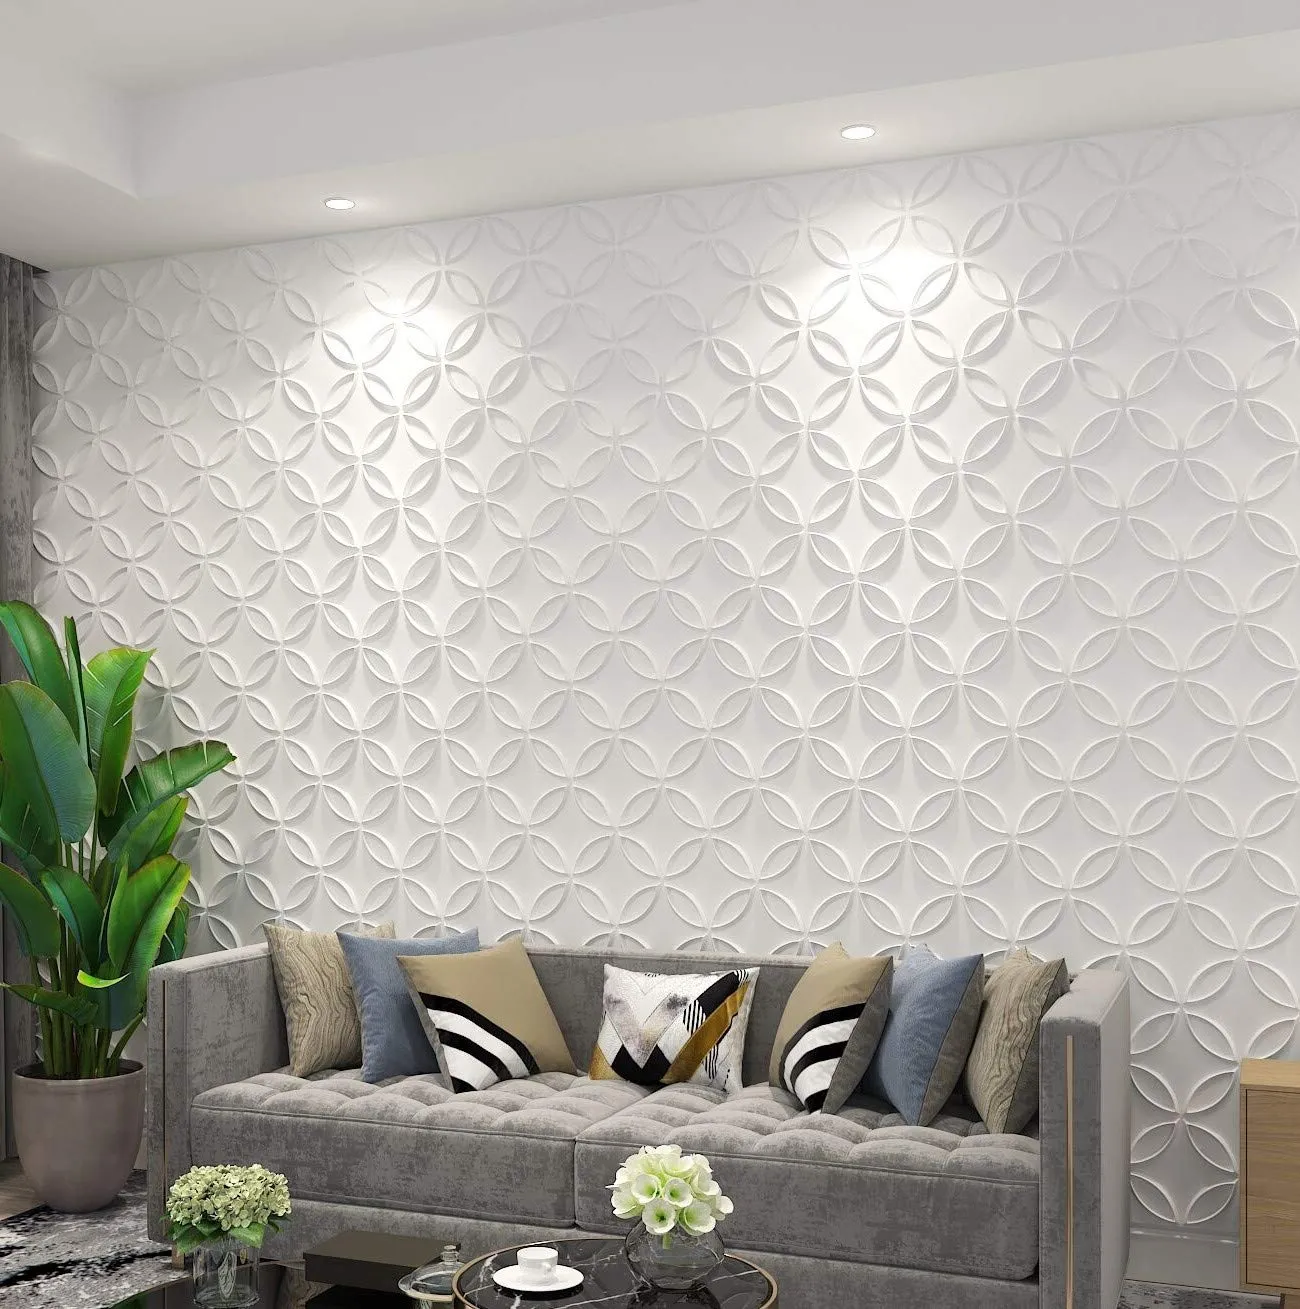 Art3D 50x50cm 3D 벽 패널 방음 스티커 연동 동그라미 흰색 인테리어 천장 및 주거 또는 상업용 (12 타일) 용 홈 장식